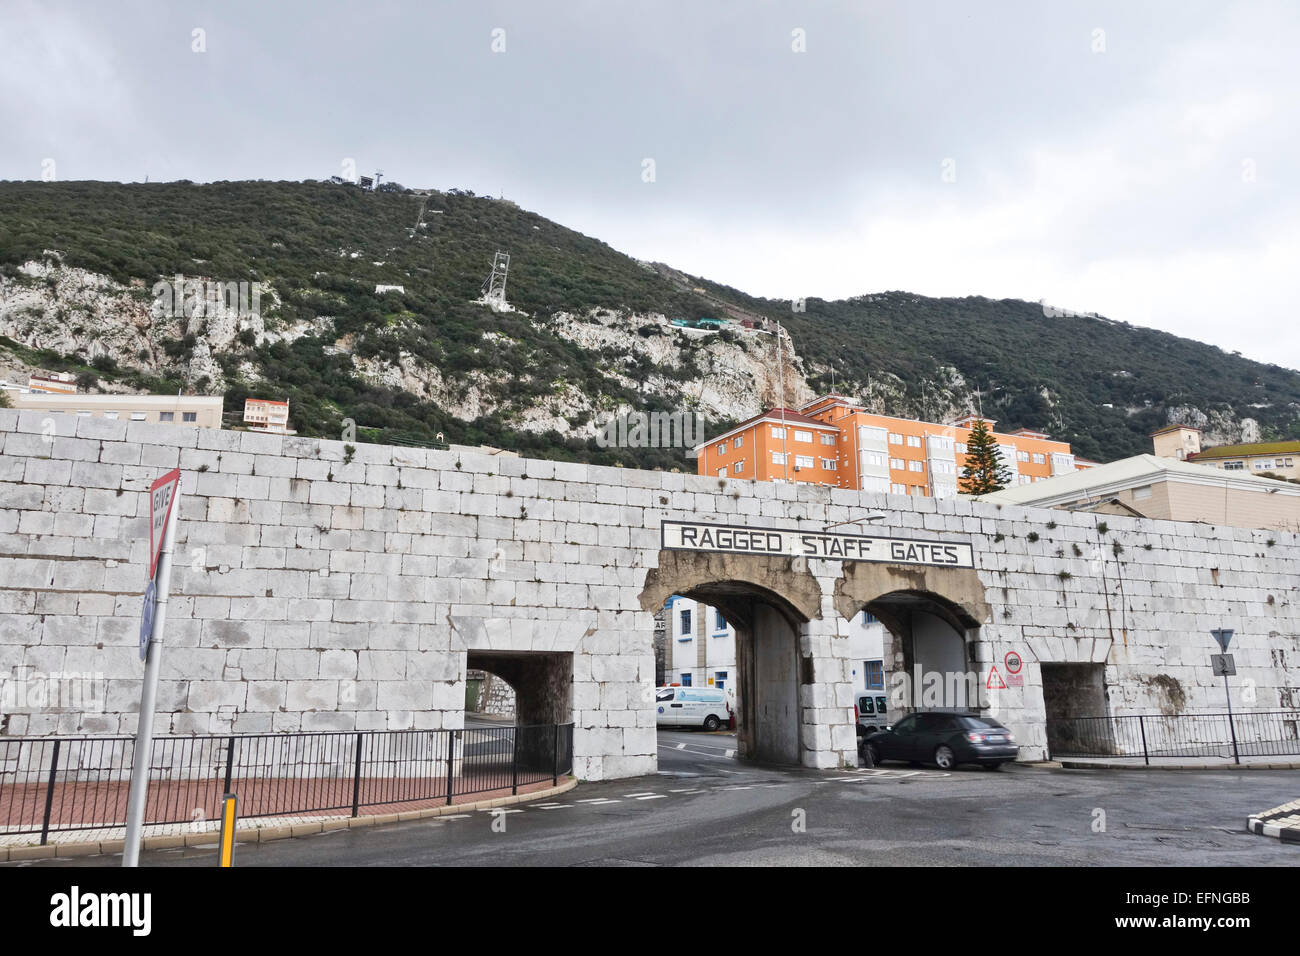 Ragged Staff Gates, gate through defensive wall, Gibraltar, overseas British territory, United Kingdom, UK Stock Photo